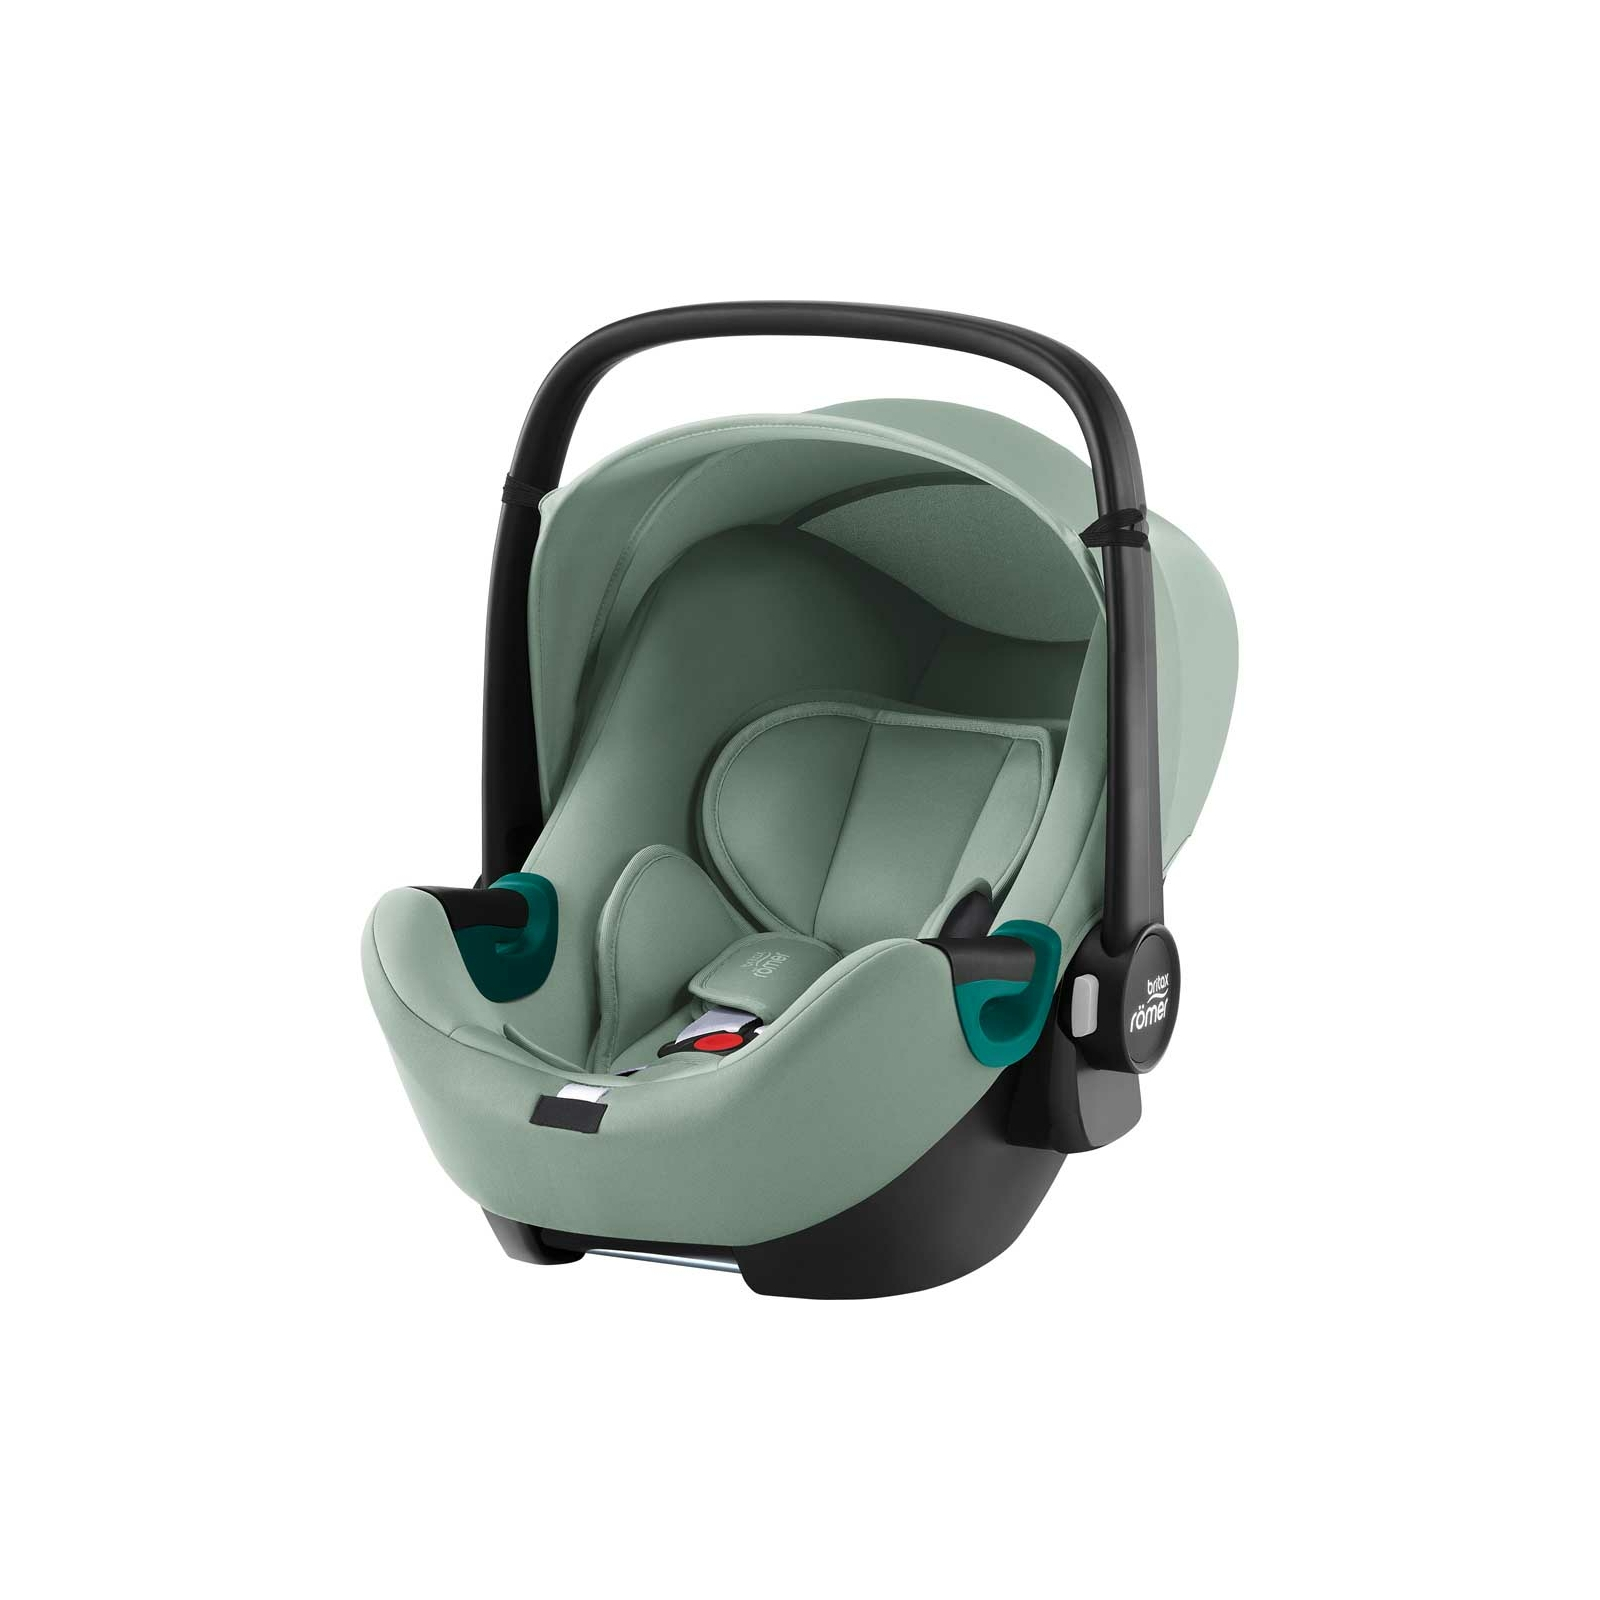 Автокресло Britax-Romer Baby-Safe 3 i-Size Indigo Blue (2000035072)